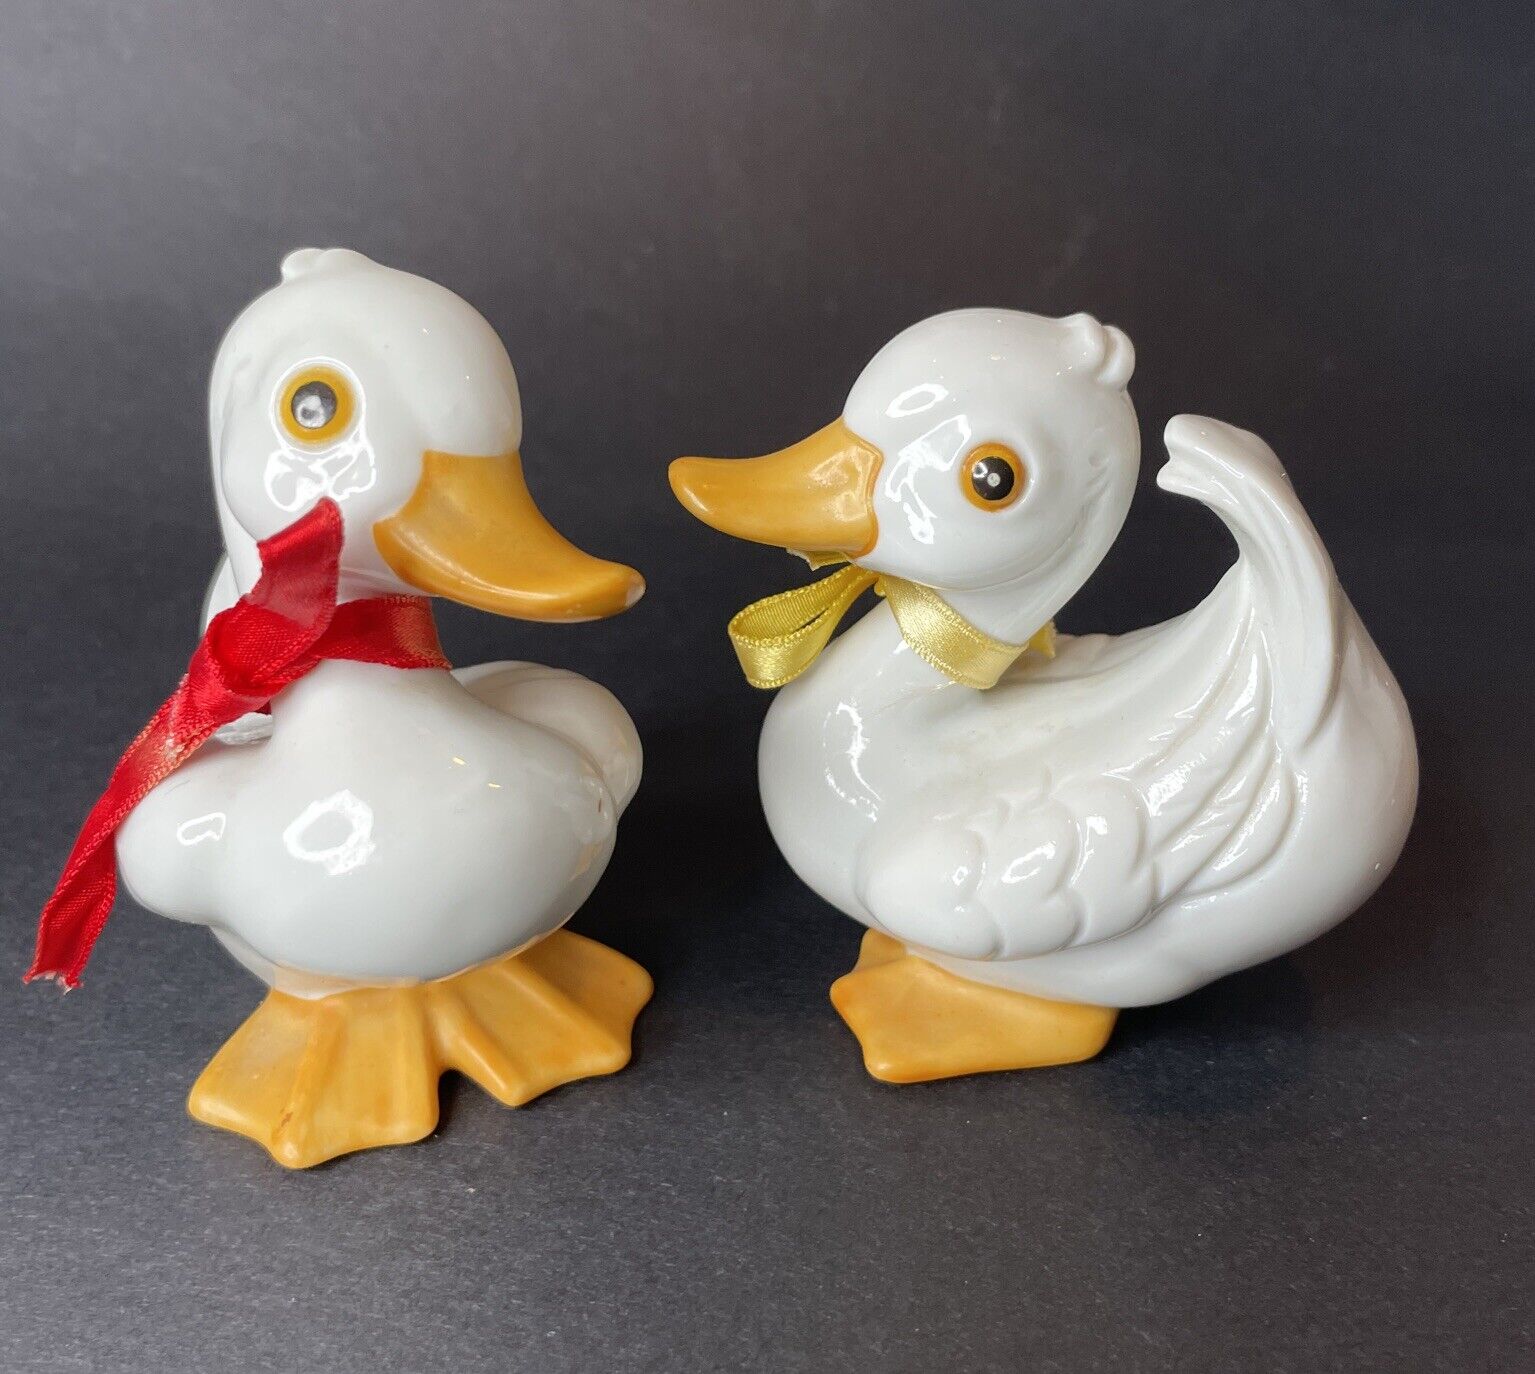 Set 2 Vintage Homco #1414  Porcelain White Ducks Figurines Super Cute Preowned